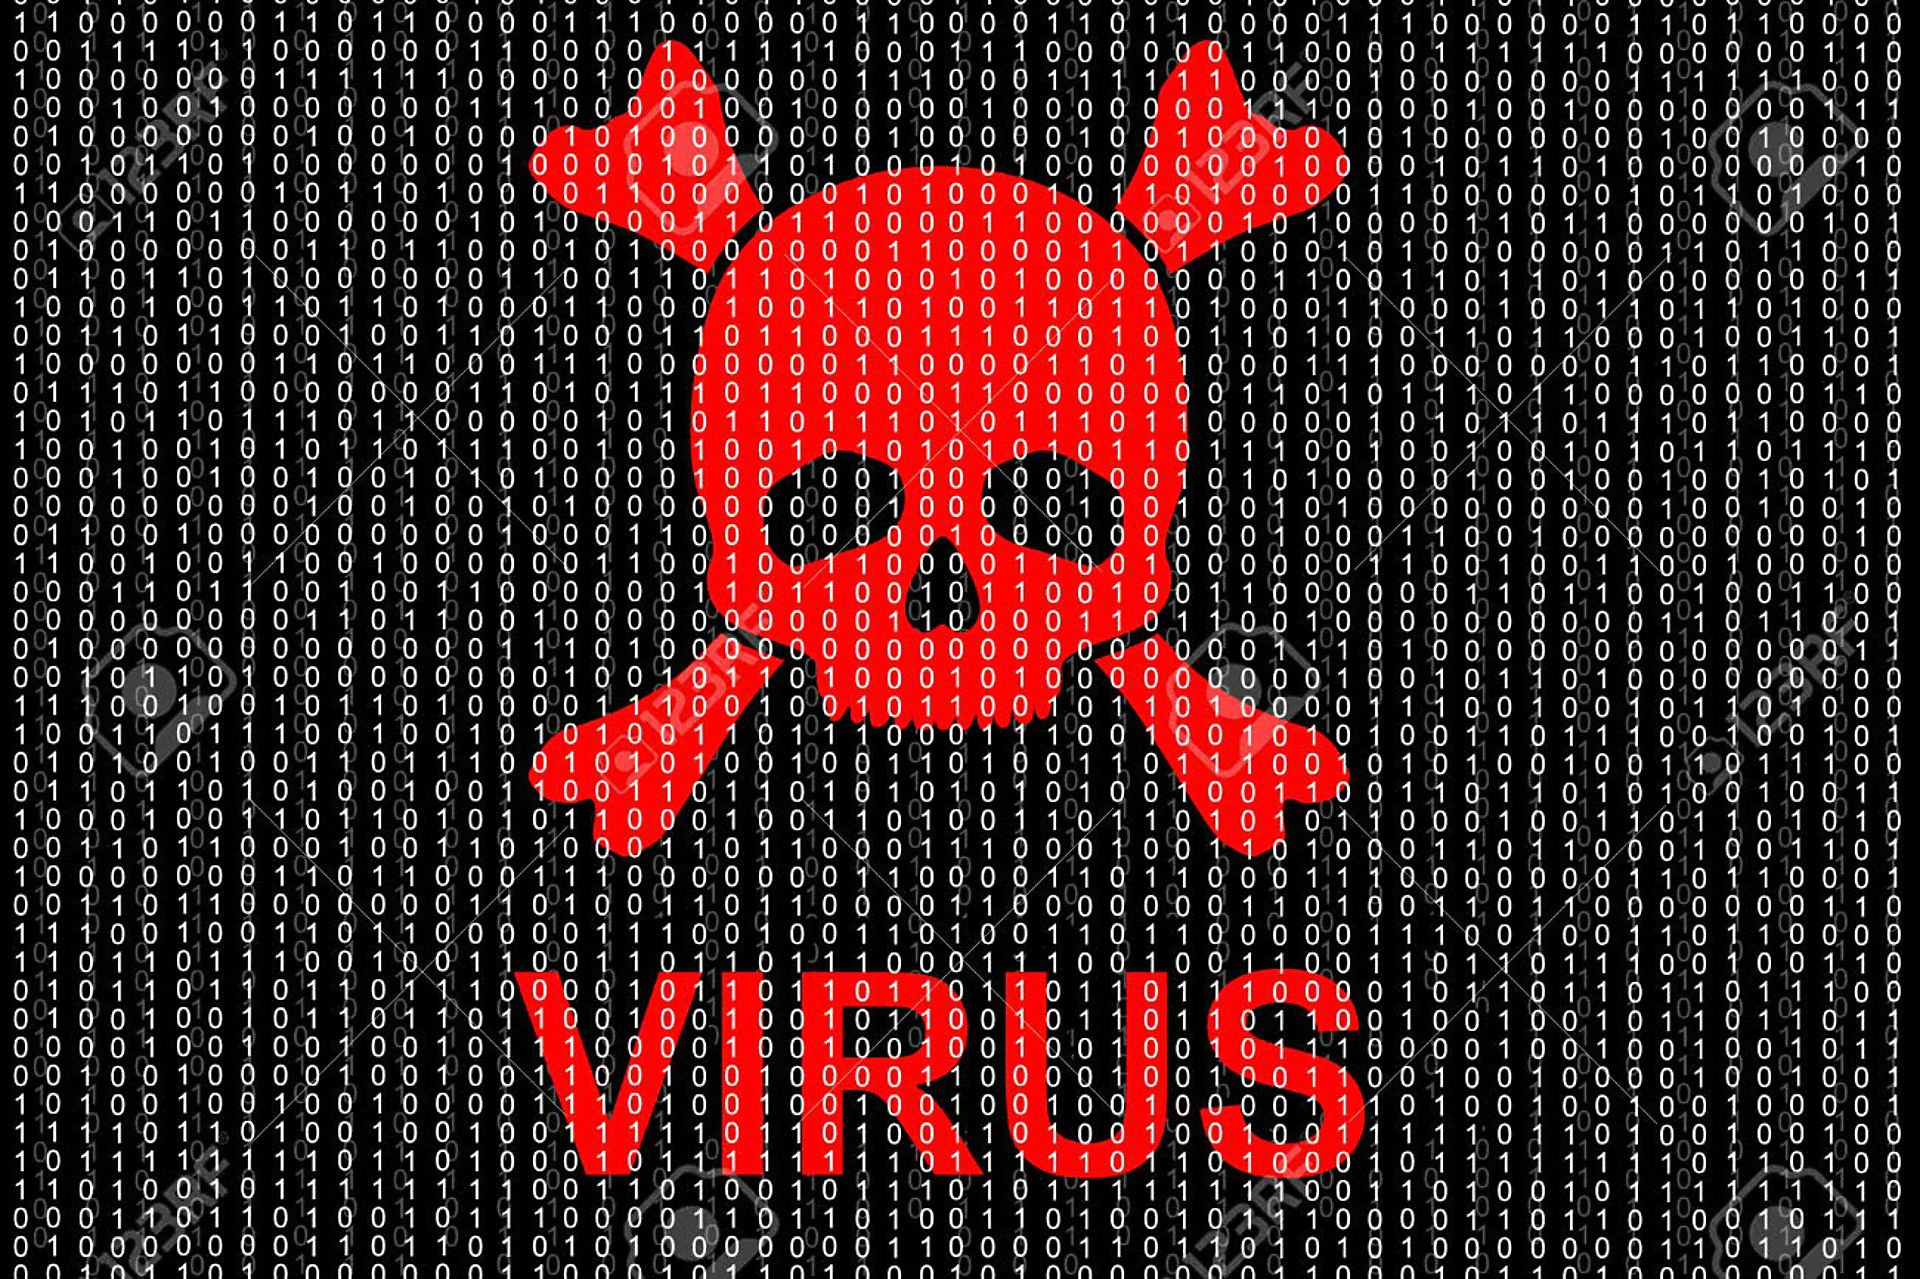 free minecraft hacks no virus